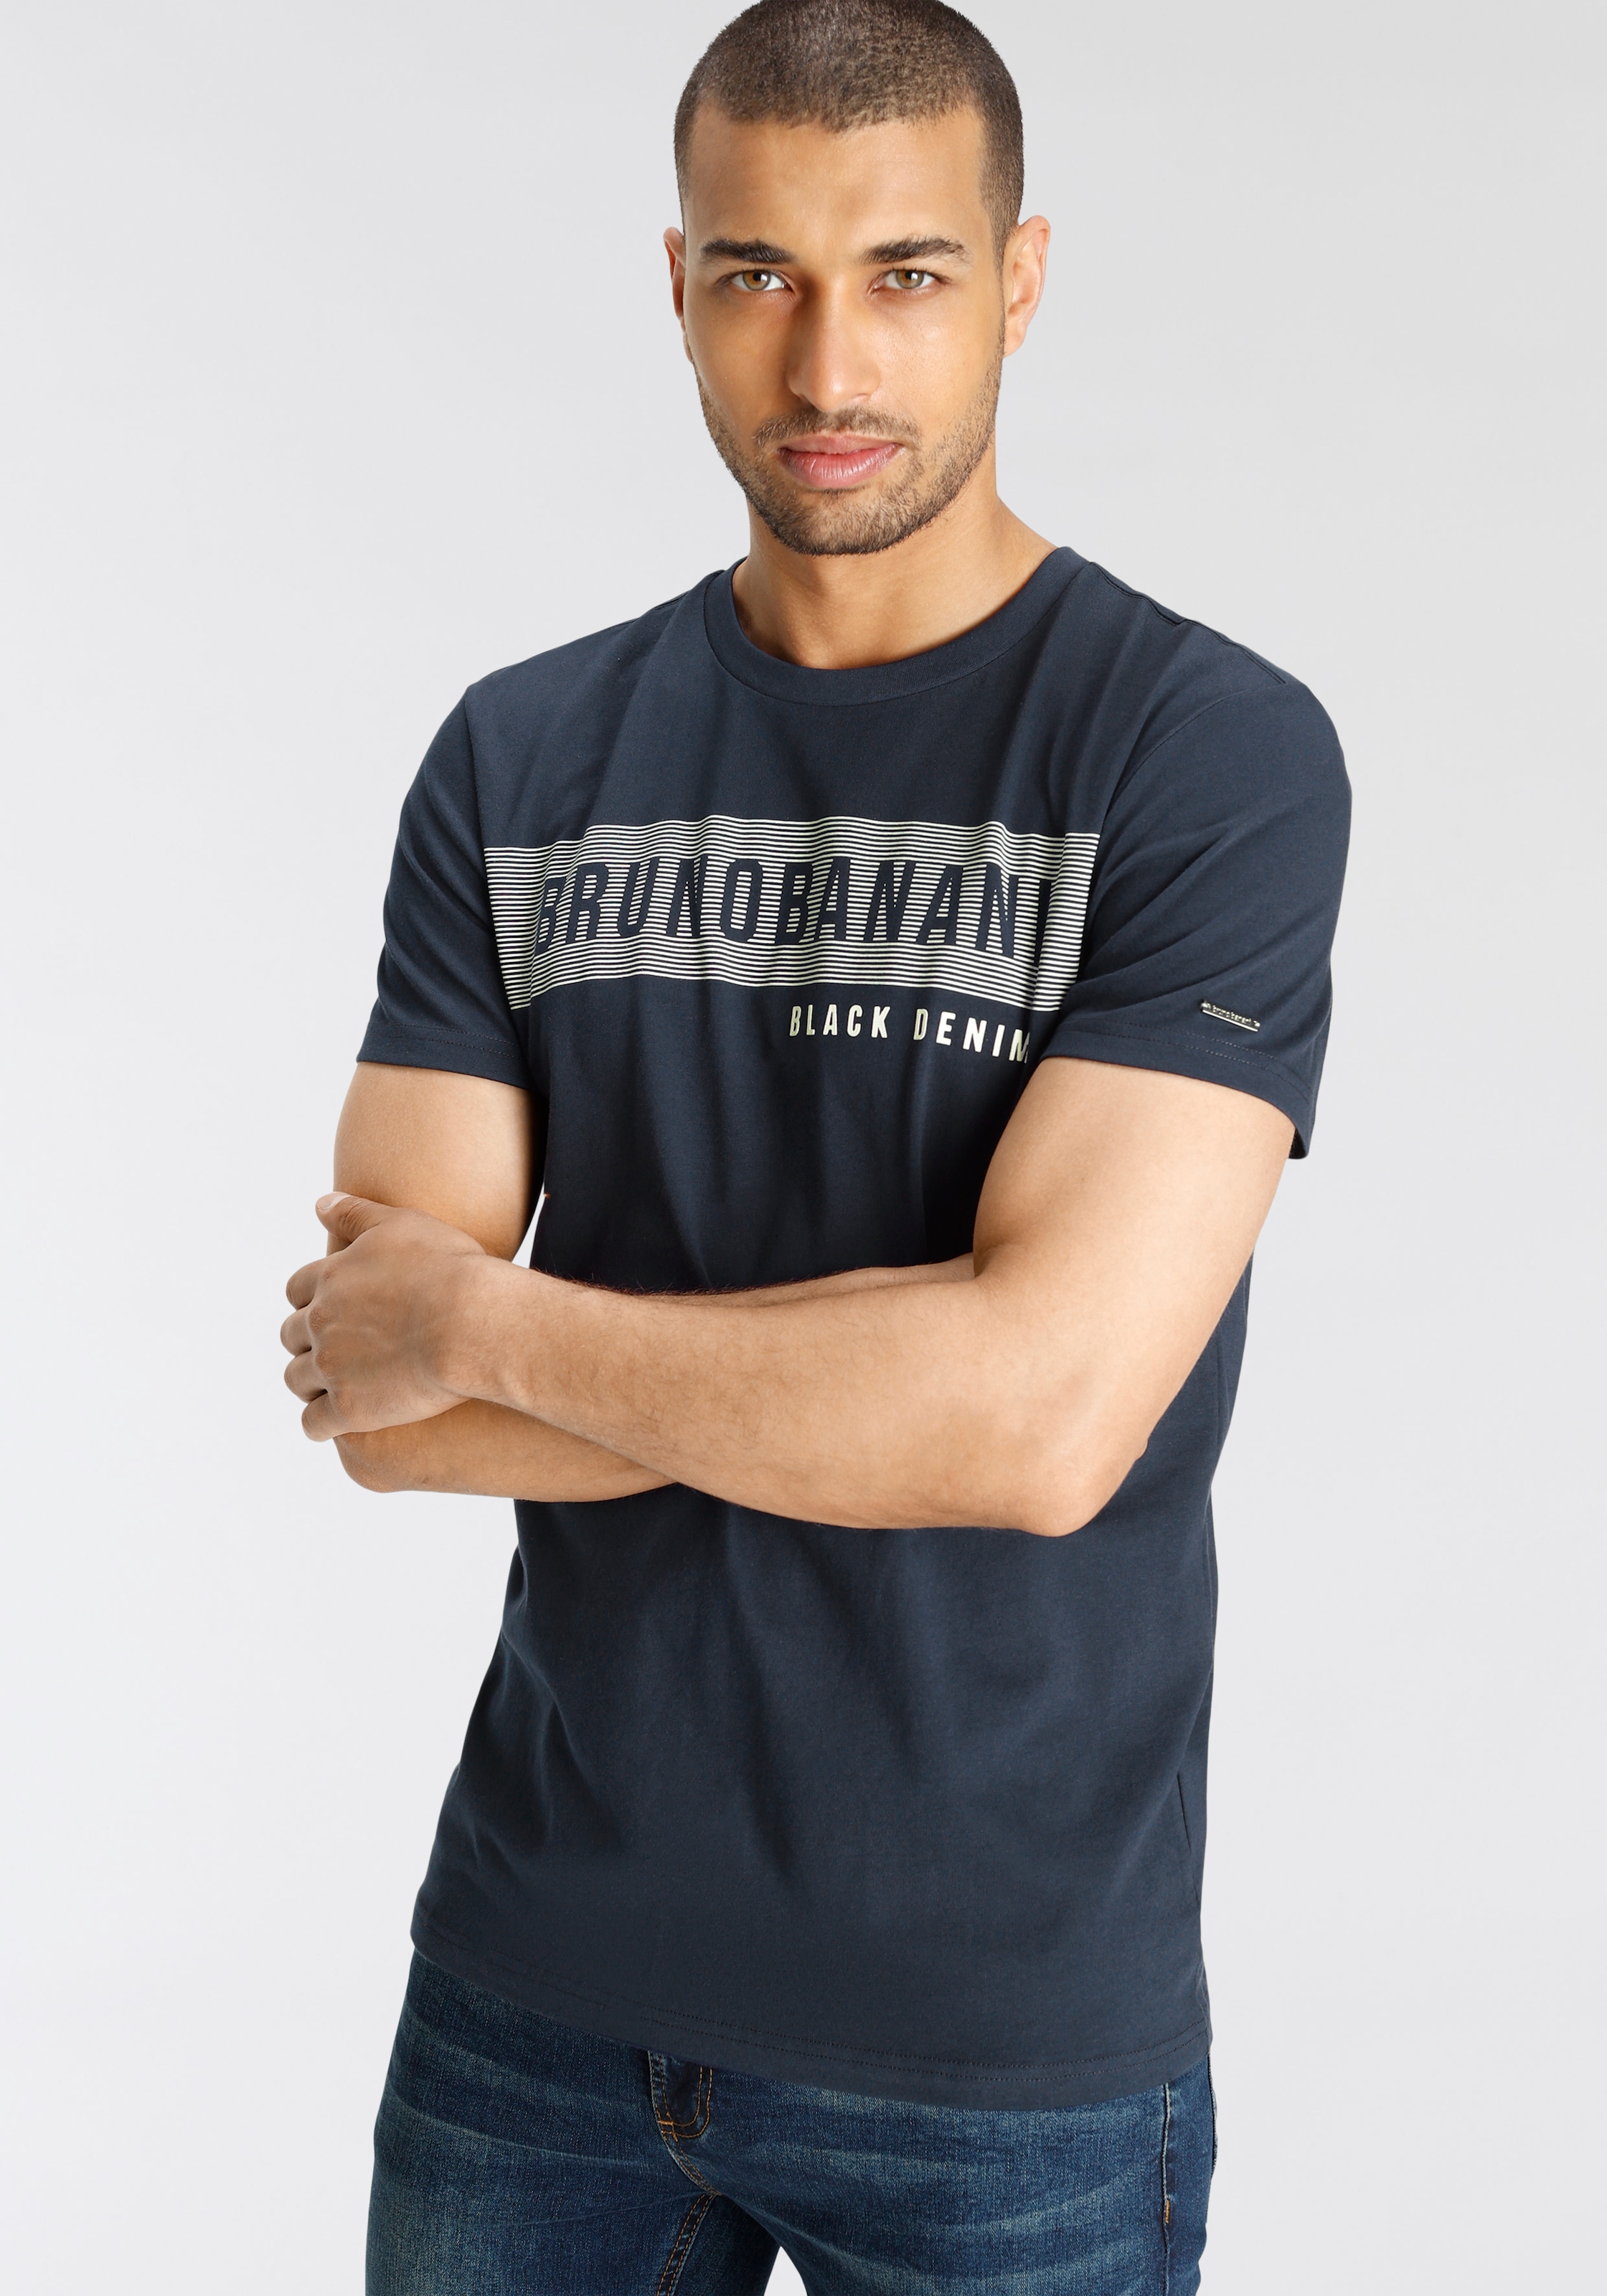 Bruno mit bei T-Shirt, Banani Markenprint ♕